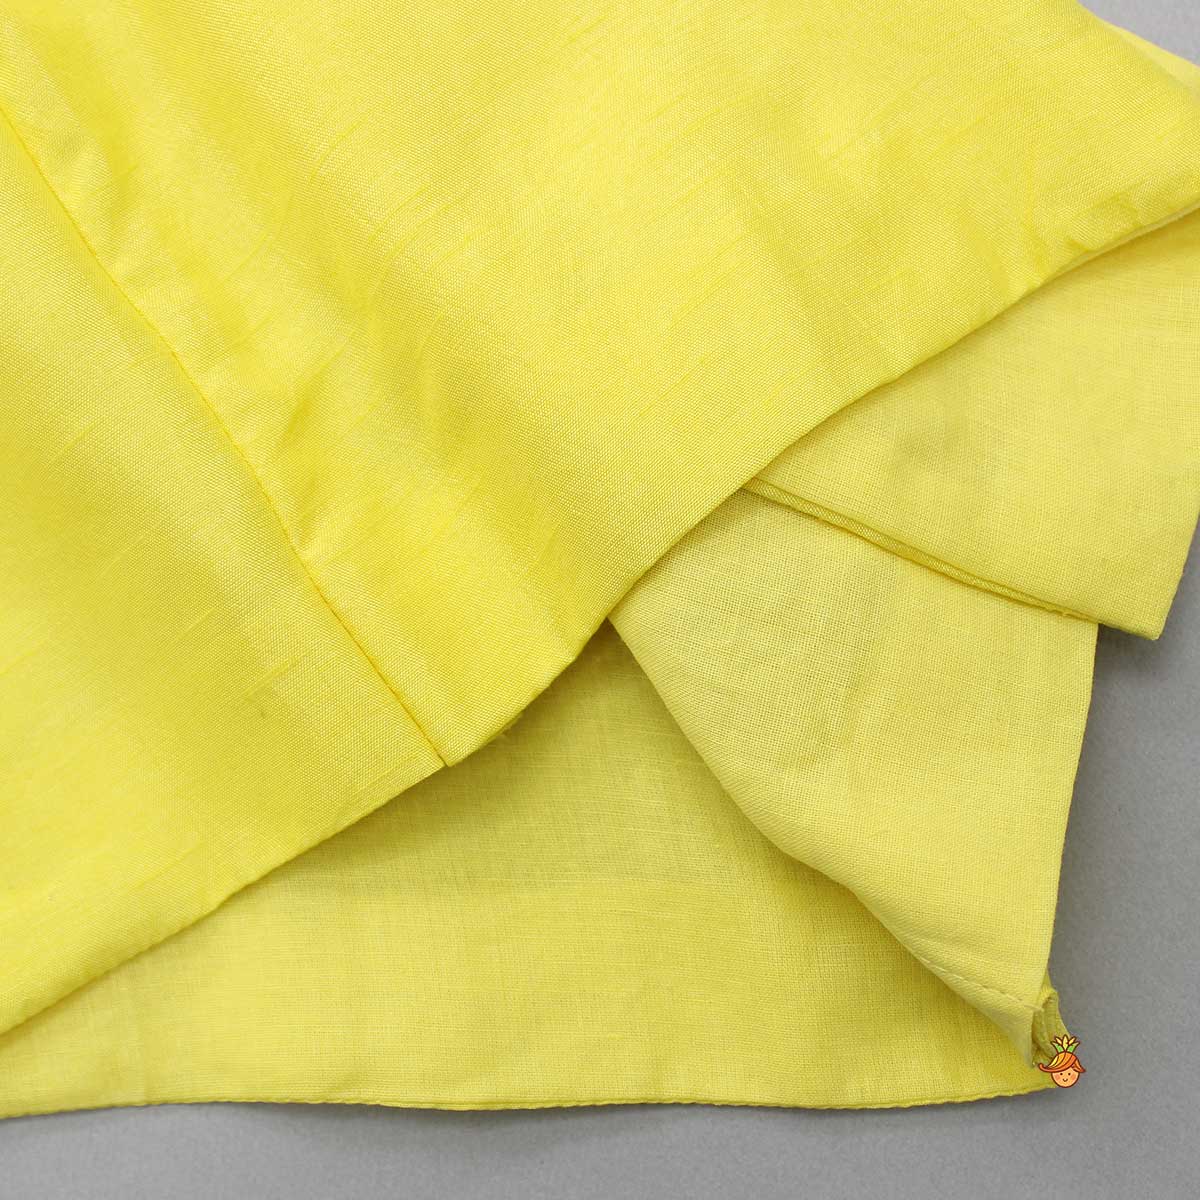 Pre Order: Animal Embroidered Angarkha Style Yellow Kurta With Lace Work Dhoti